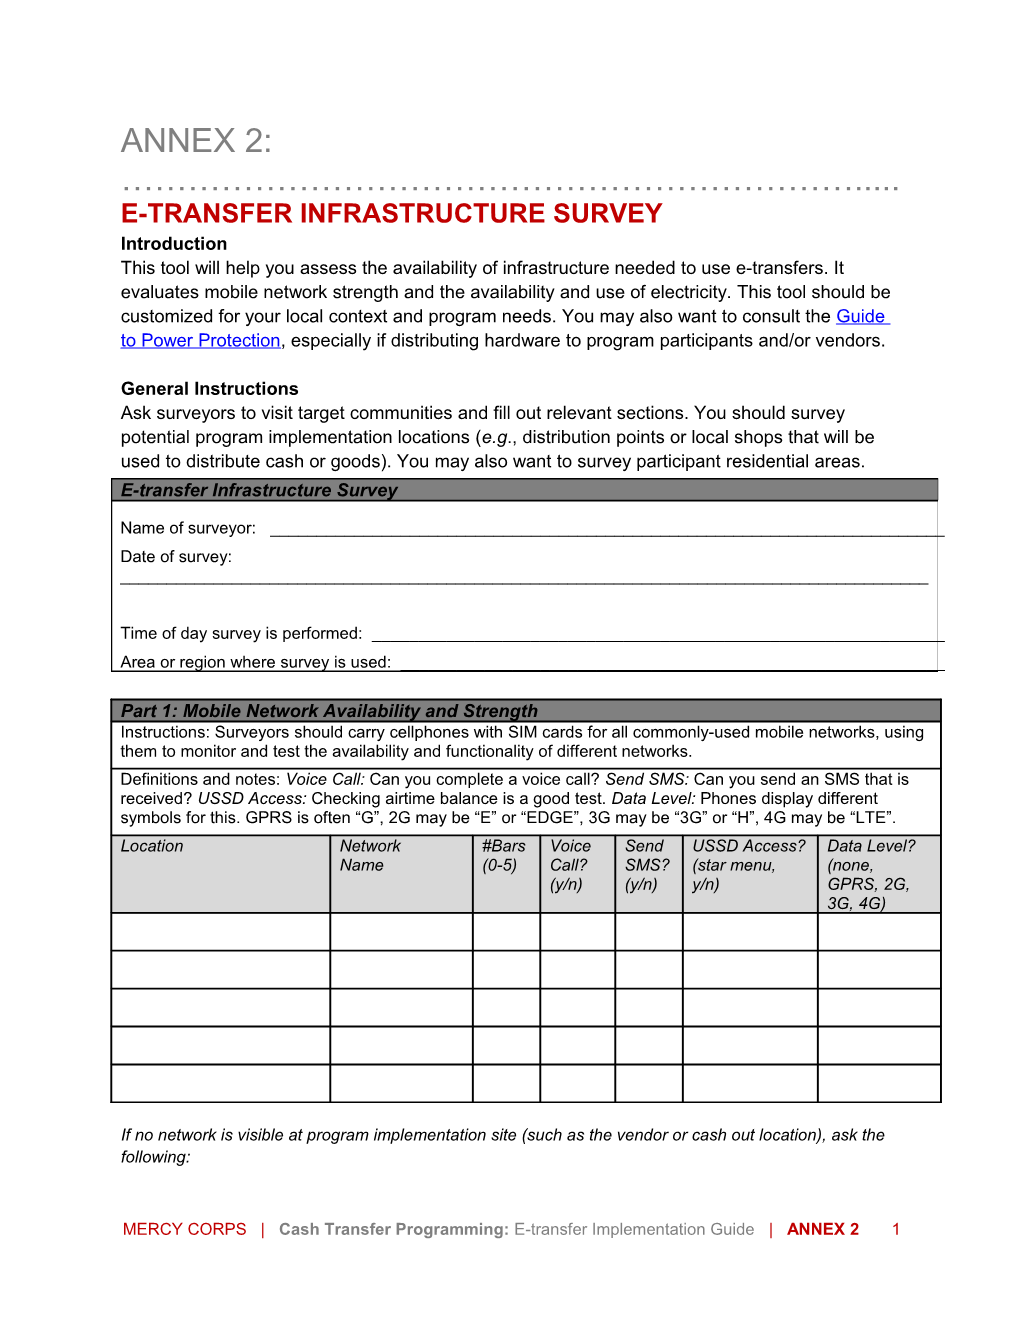 E-Transfer Infrastructure Survey